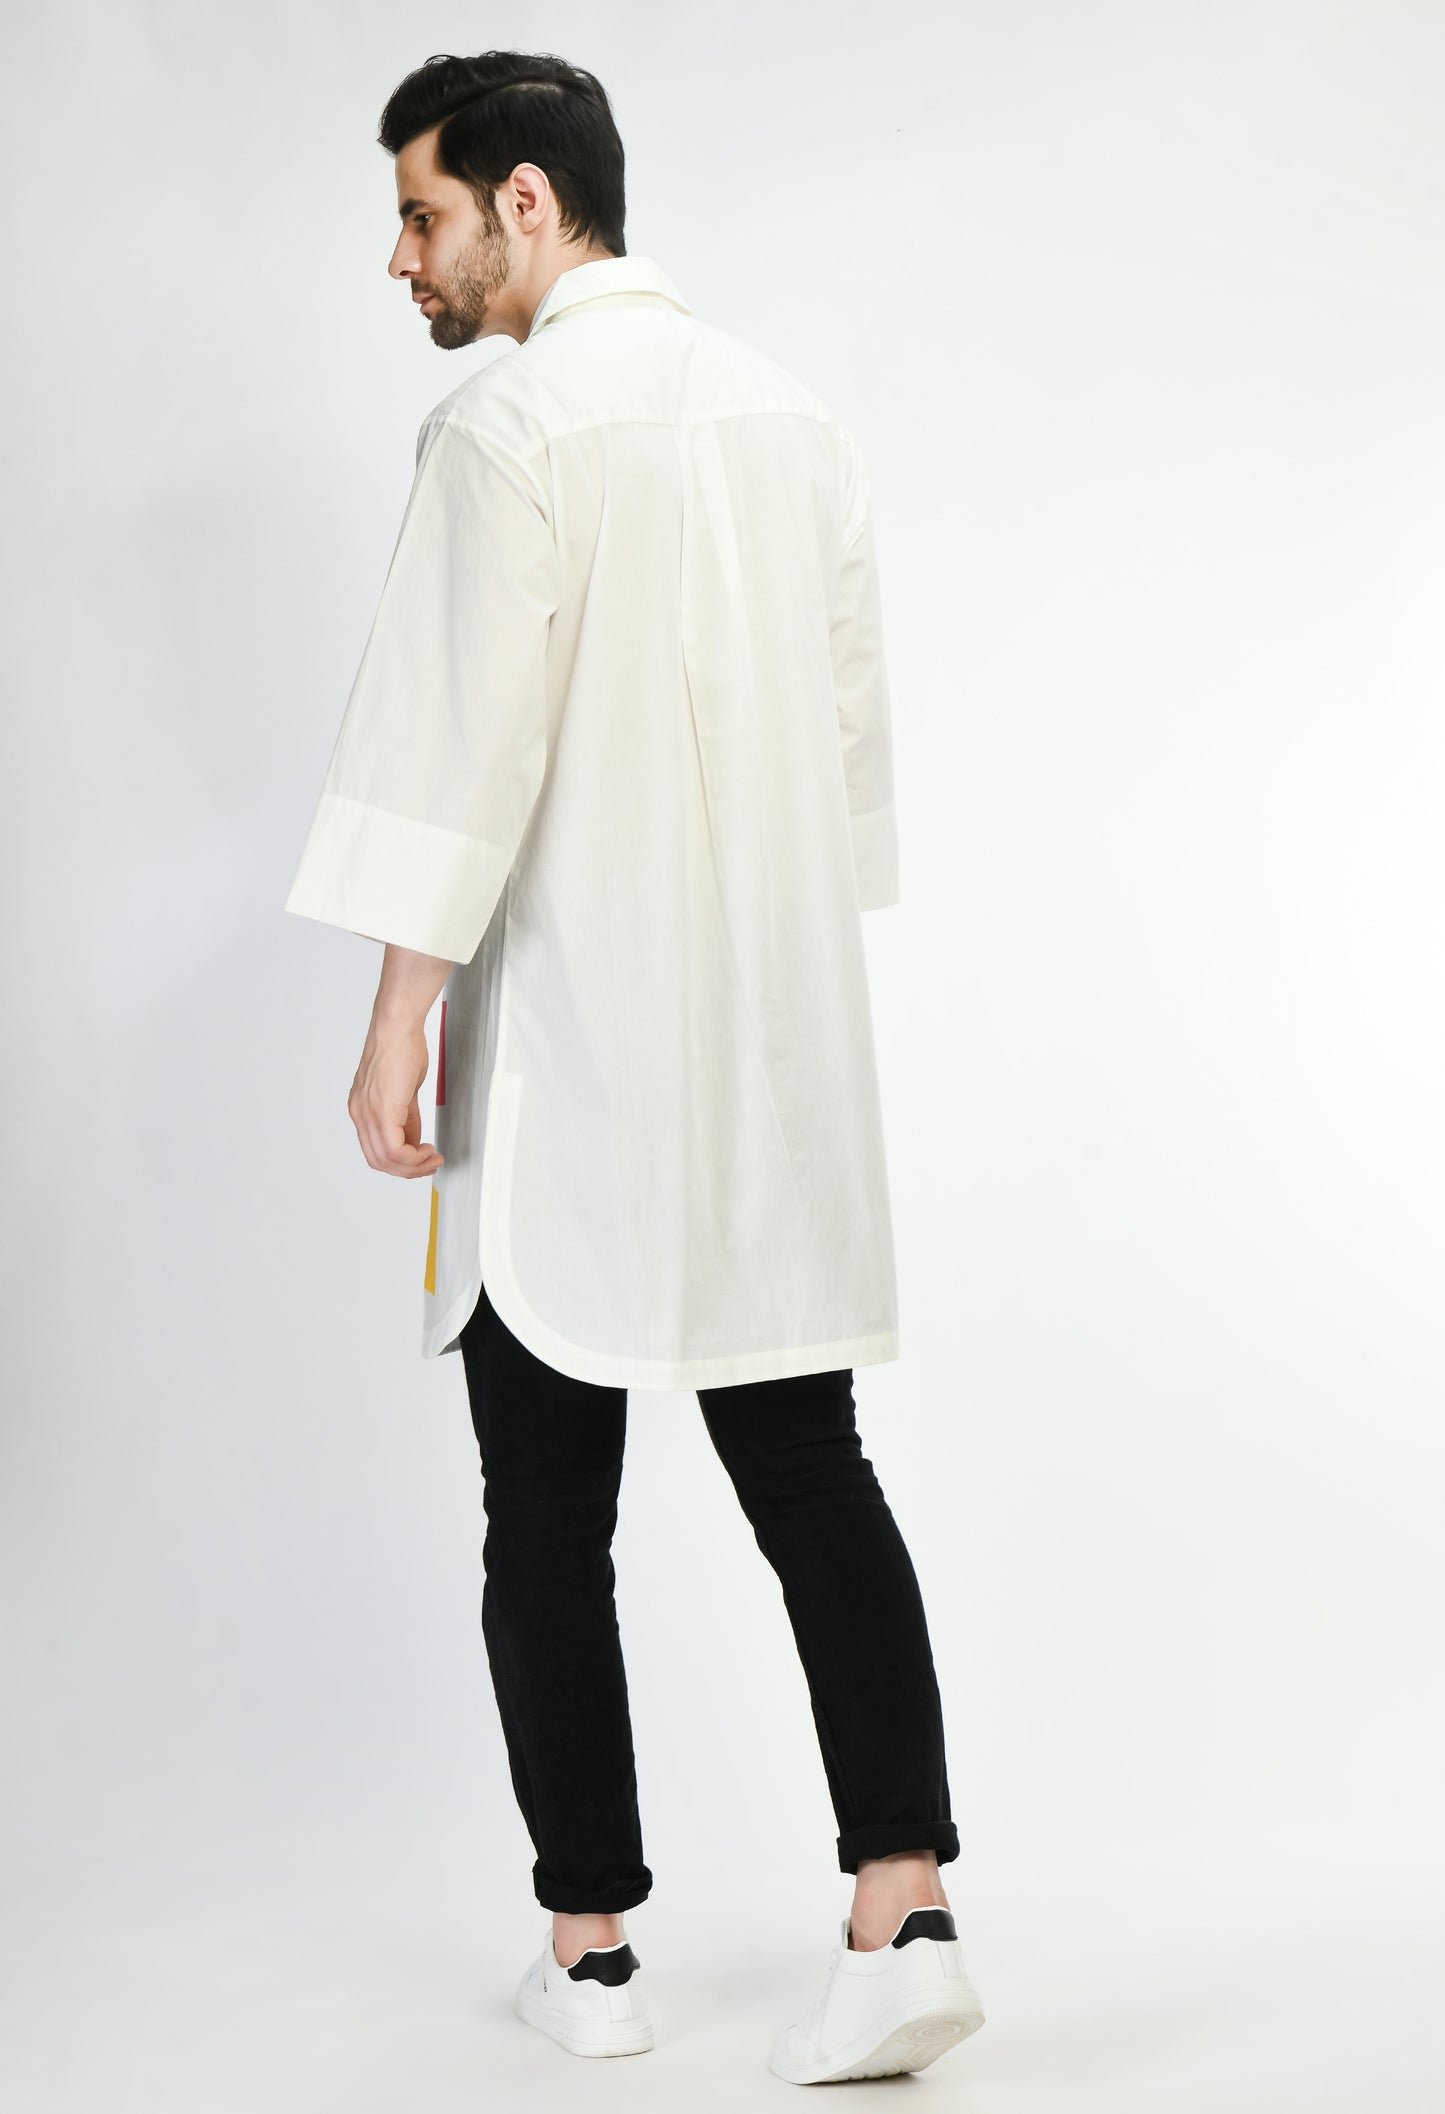 White cotton unisex long shirt.